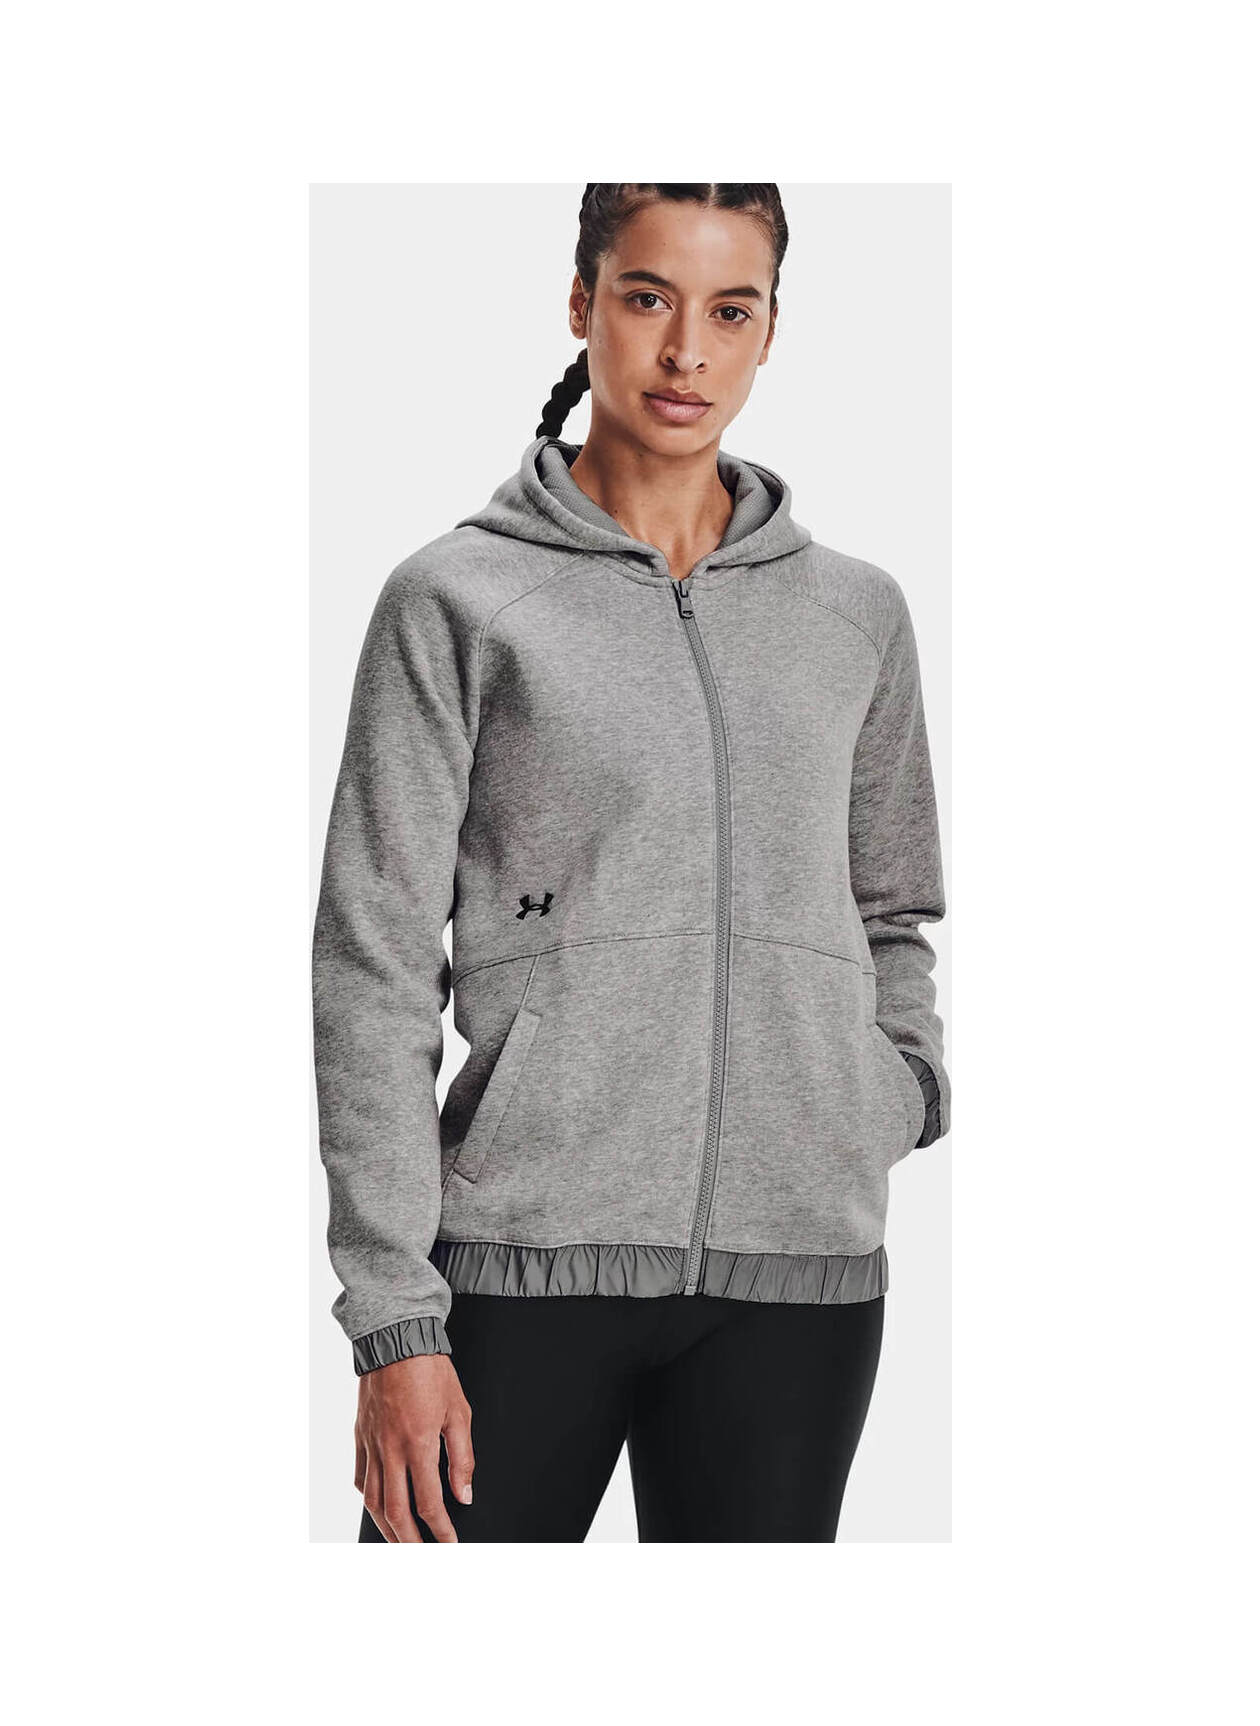 Under Armour Hustle Full-Zip Hooded Sweatshirt True Grey Heather / Black  Women's 1351229